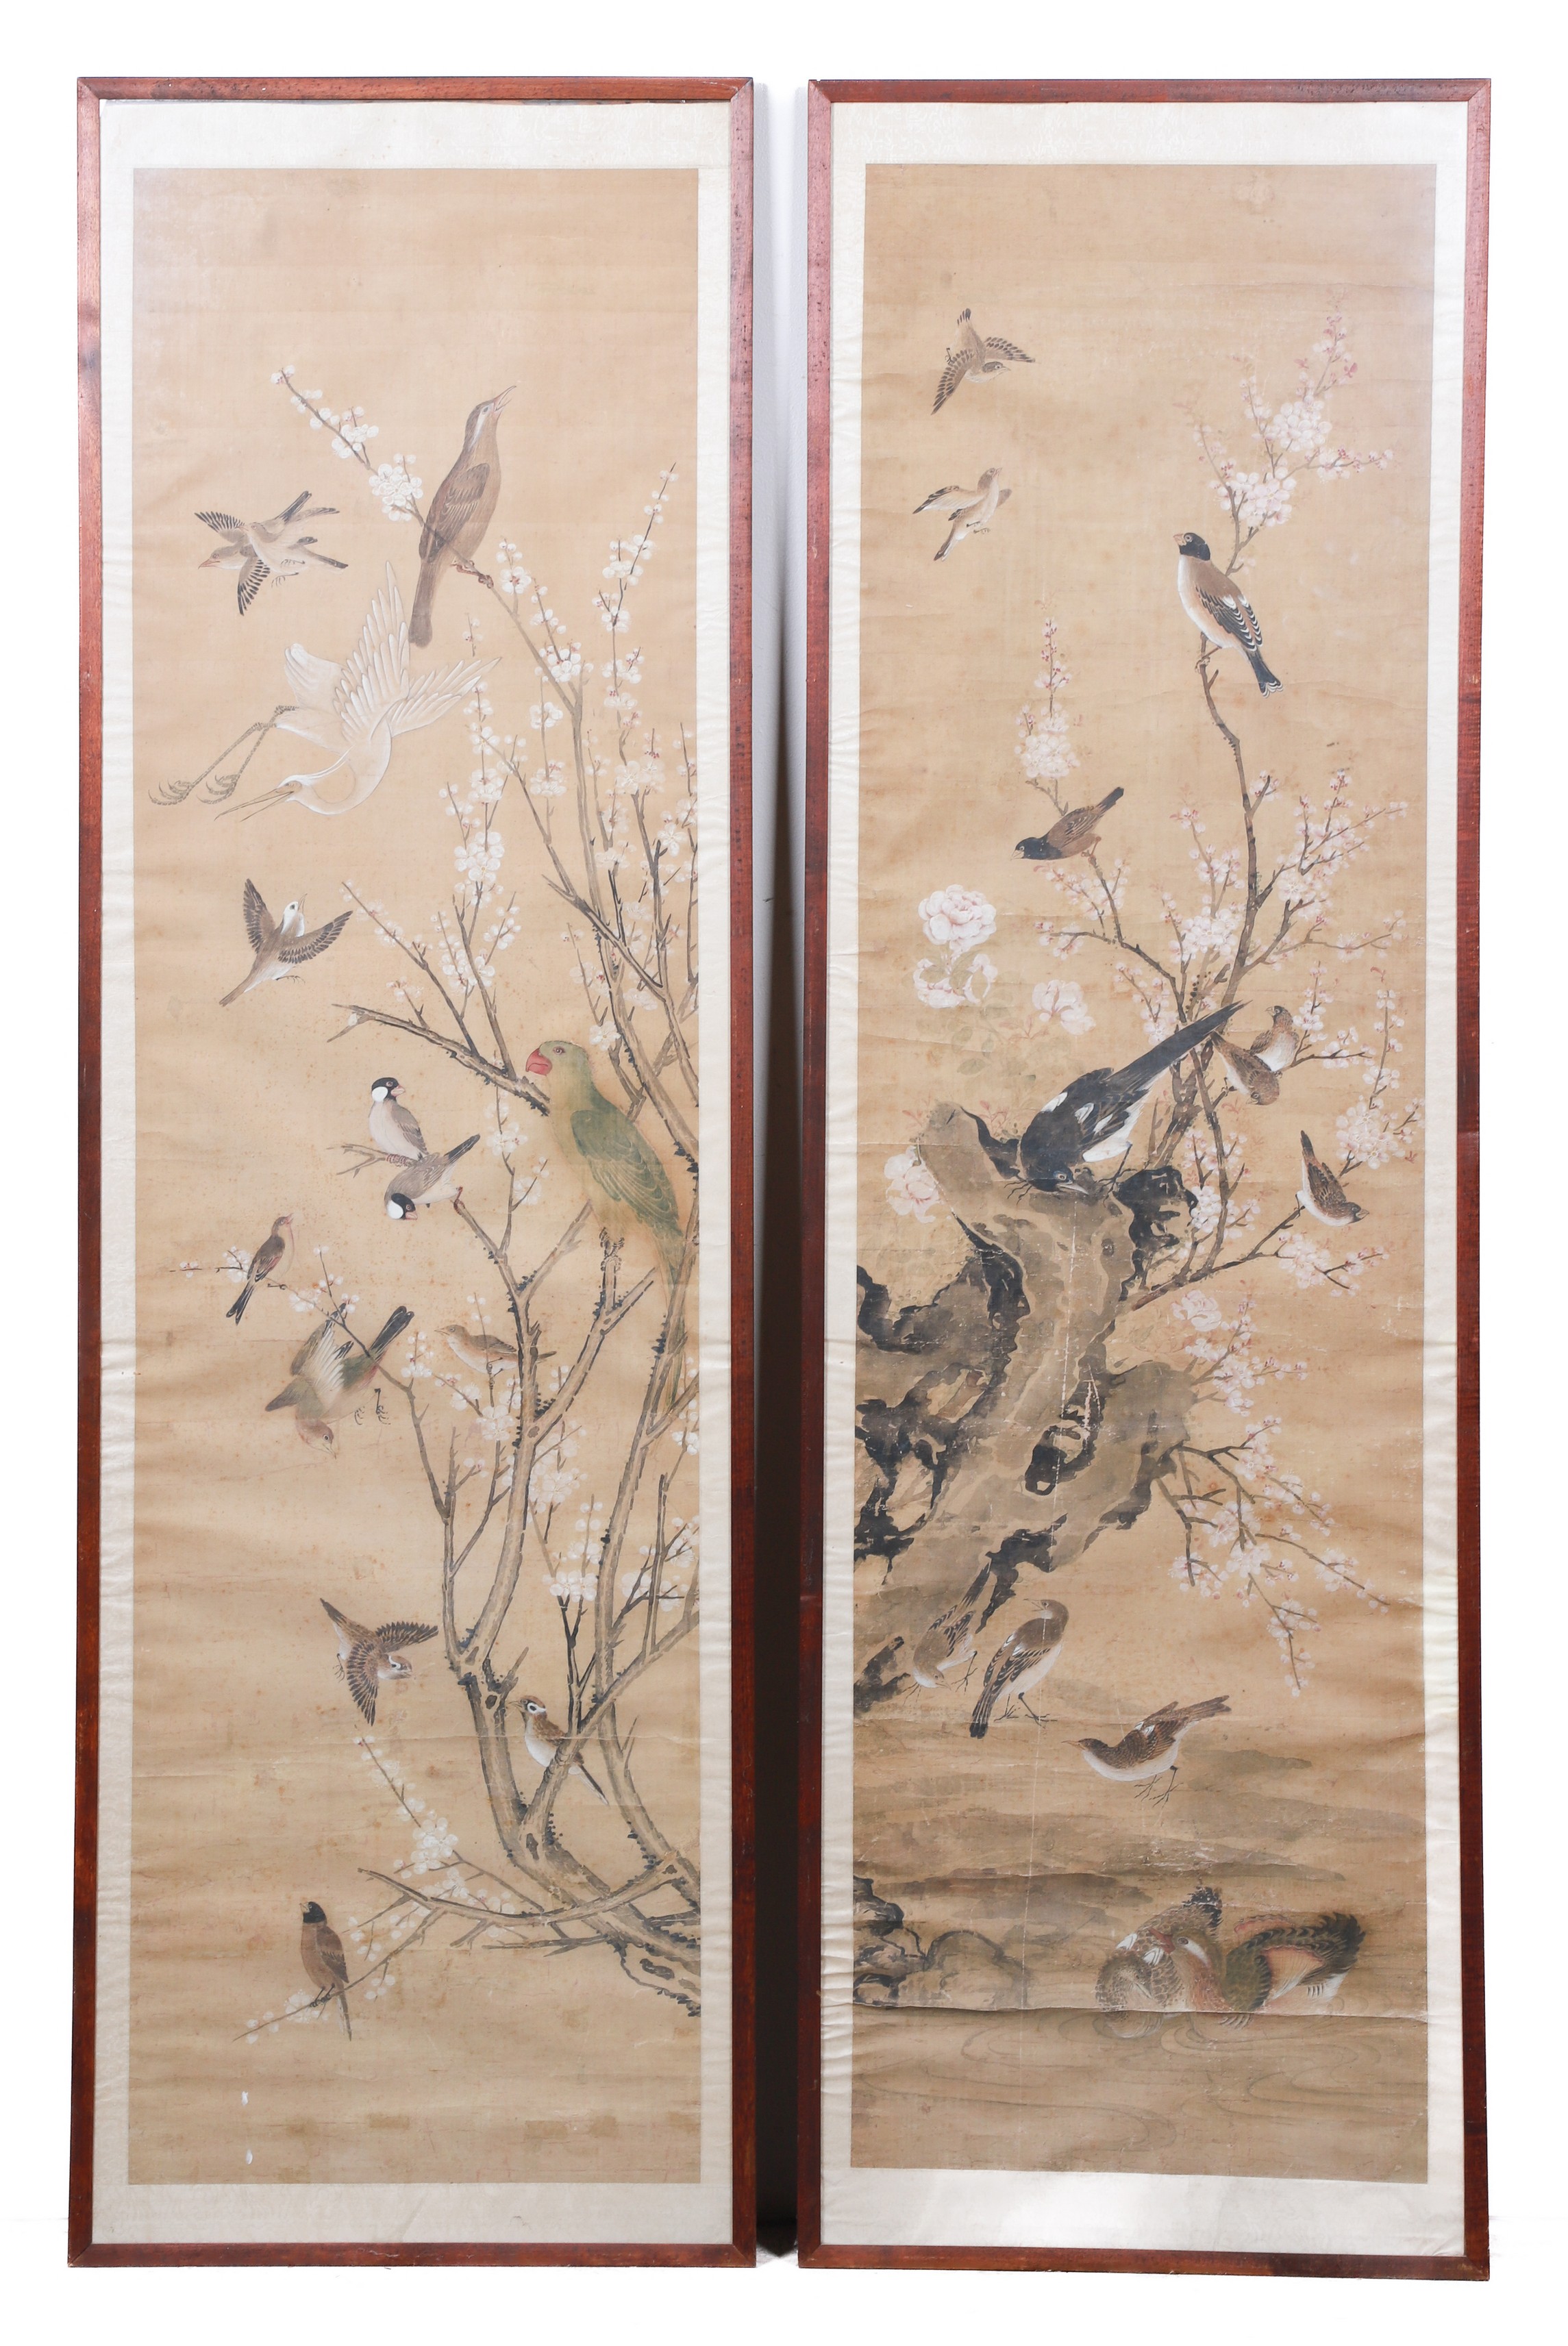 Pair of Chinese scrolls, birds